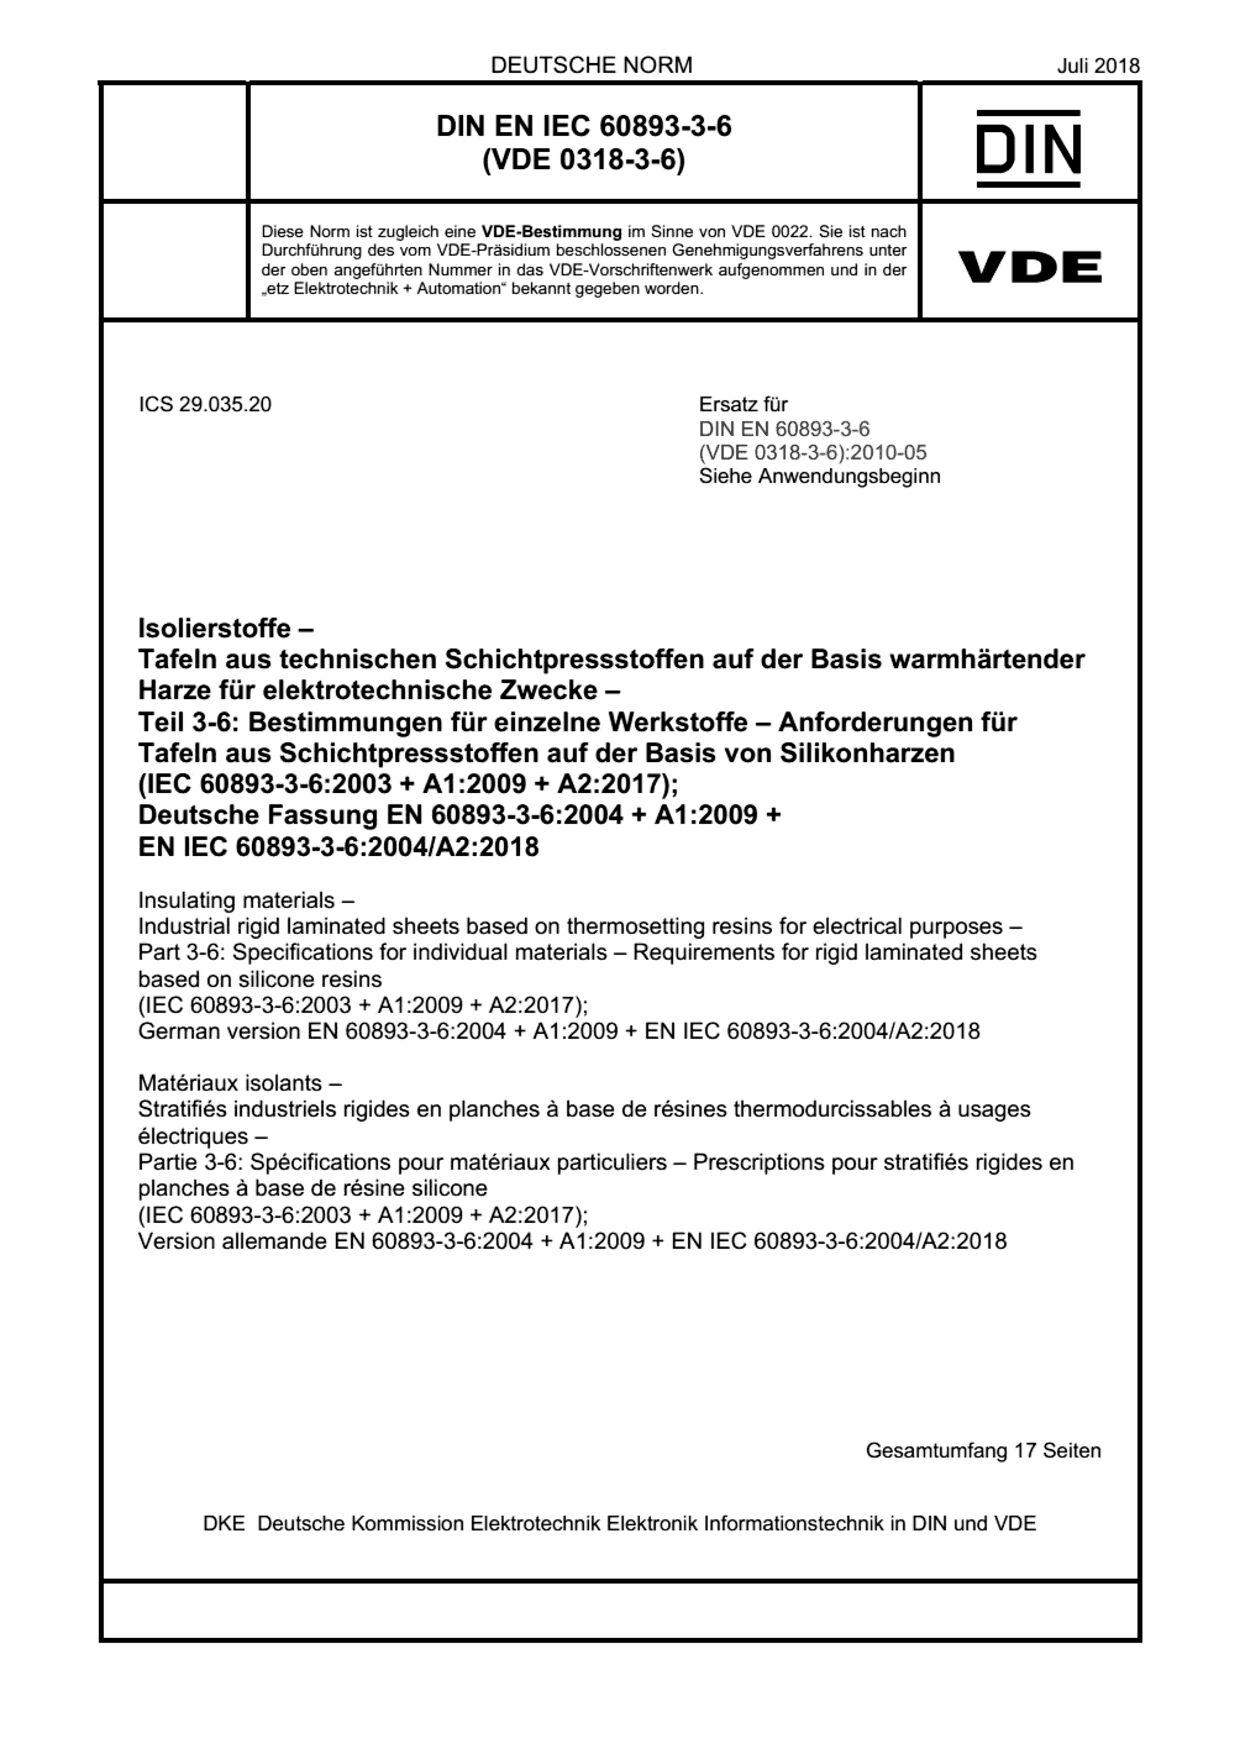 DIN EN IEC 60893-3-6:2018封面图